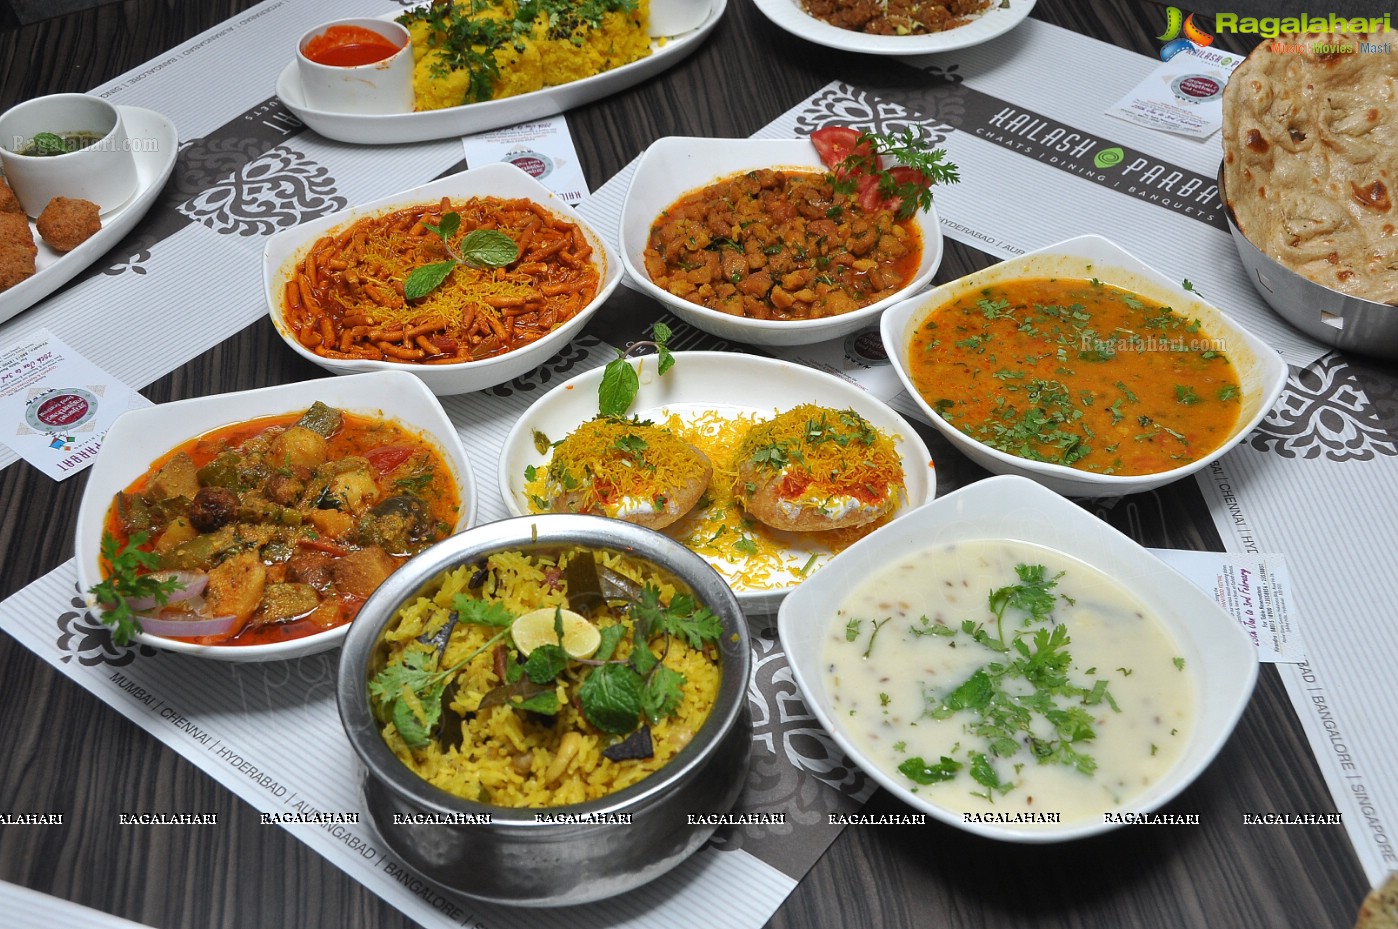 Gujarati and Rajasthani Food Fest at Kailash Parbat, Hyderabad